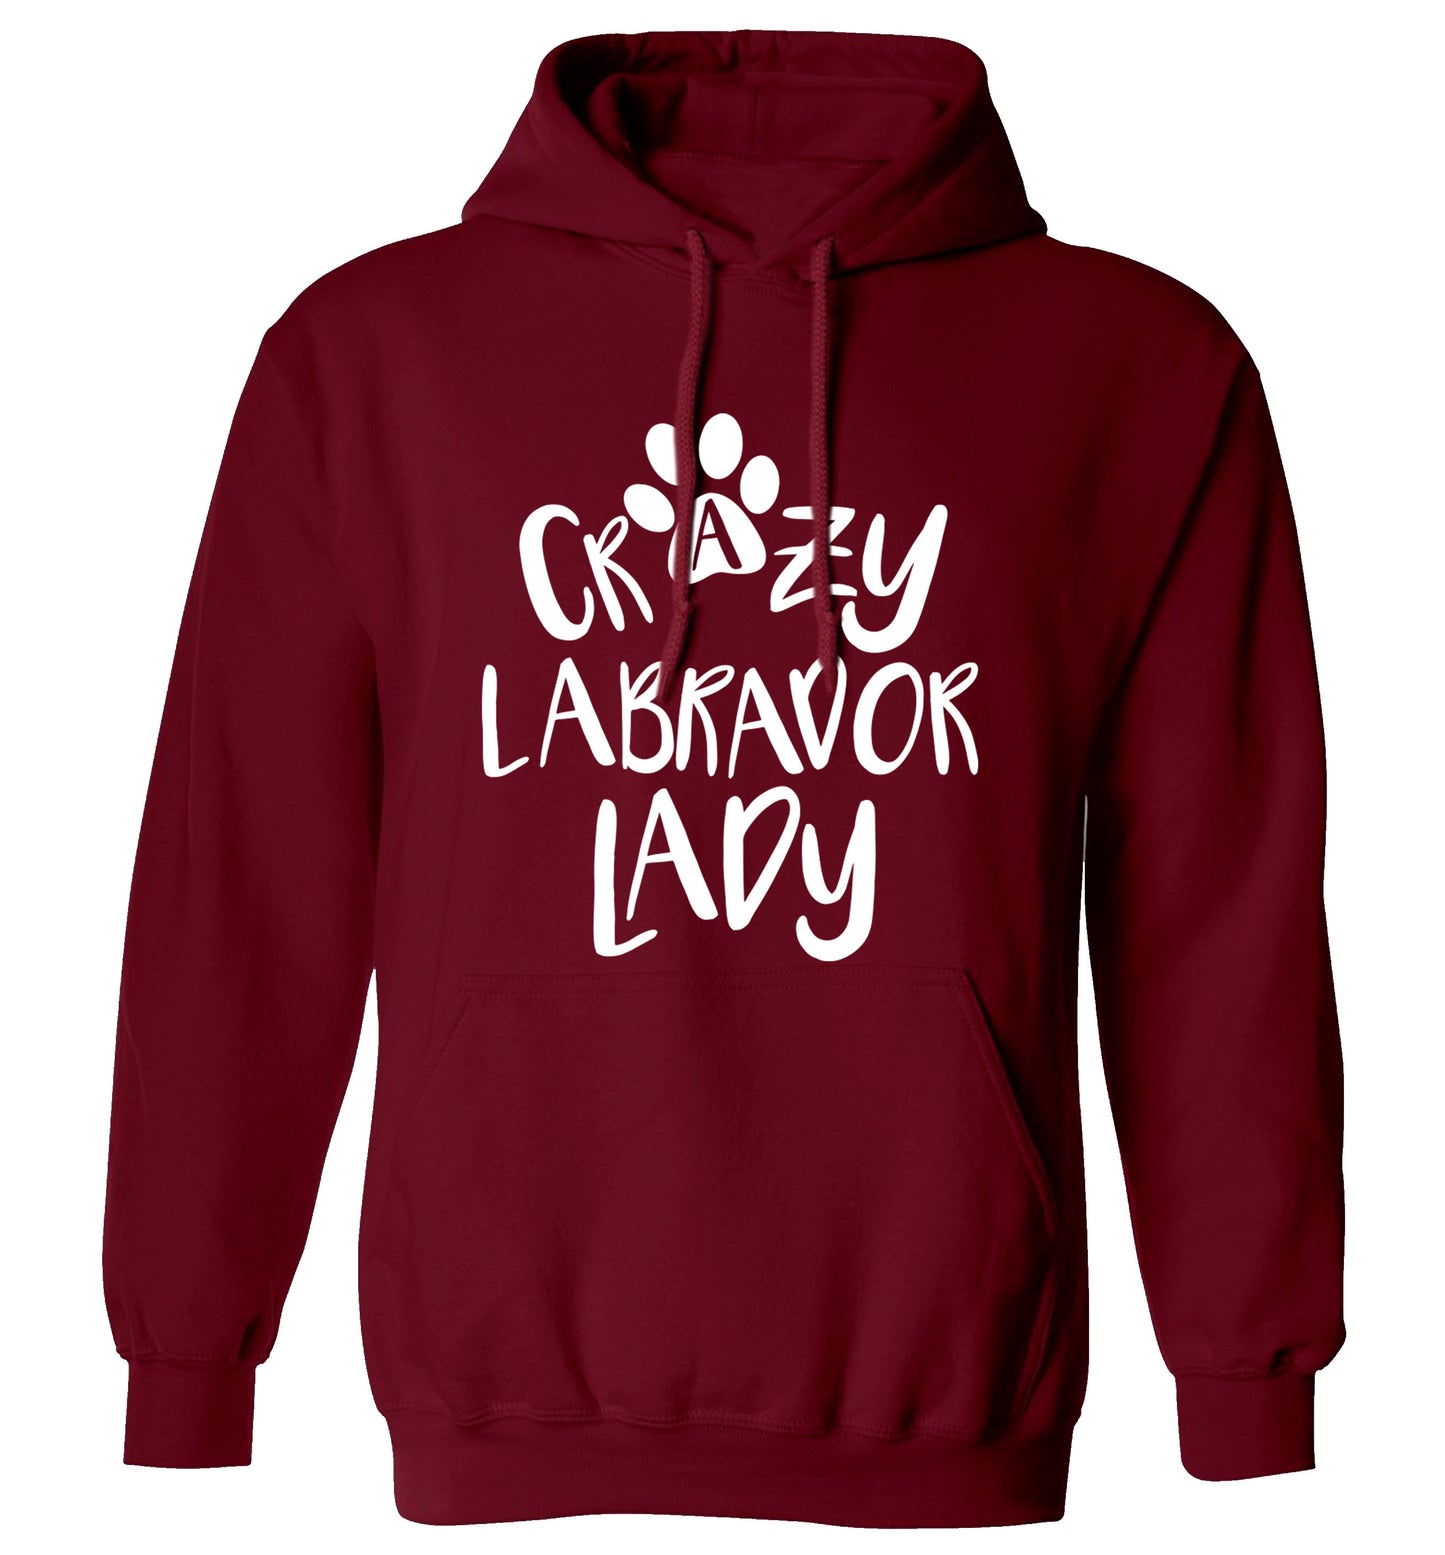 Crazy labrador lady adults unisex maroon hoodie 2XL